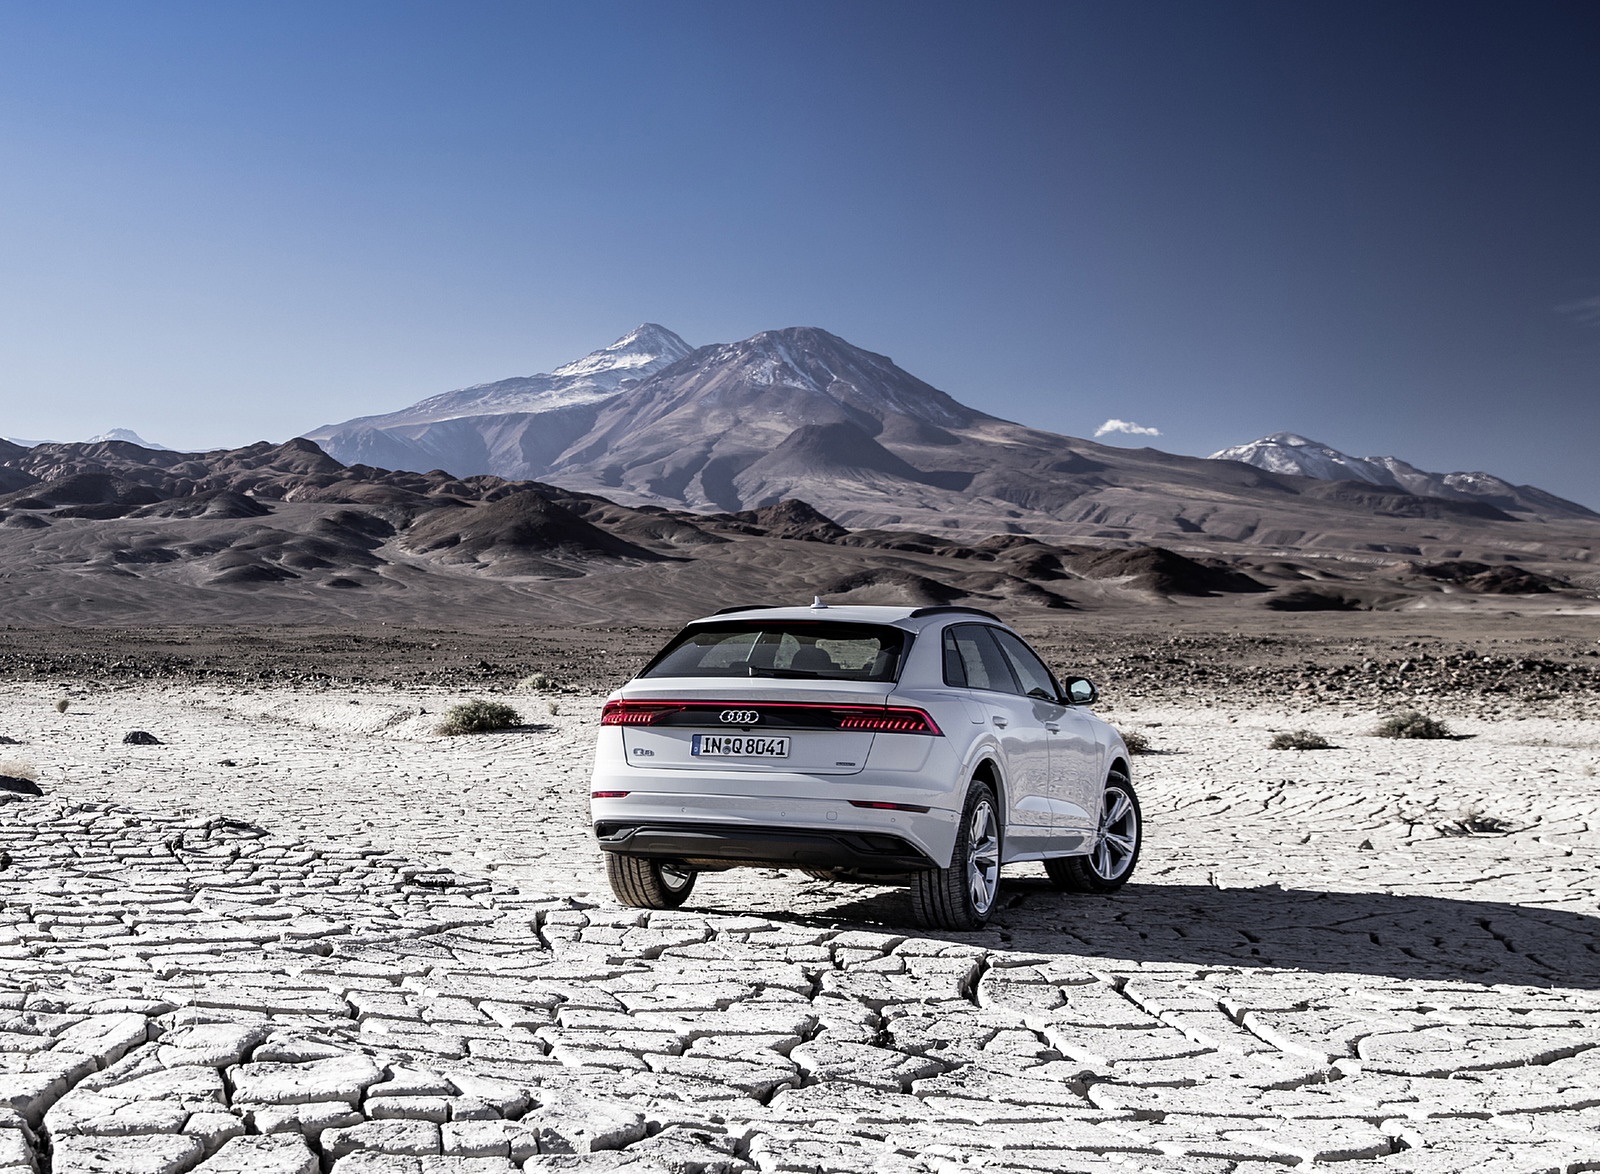 2019 Audi Q8 (Color: Glacier White) Rear Wallpapers #205 of 260